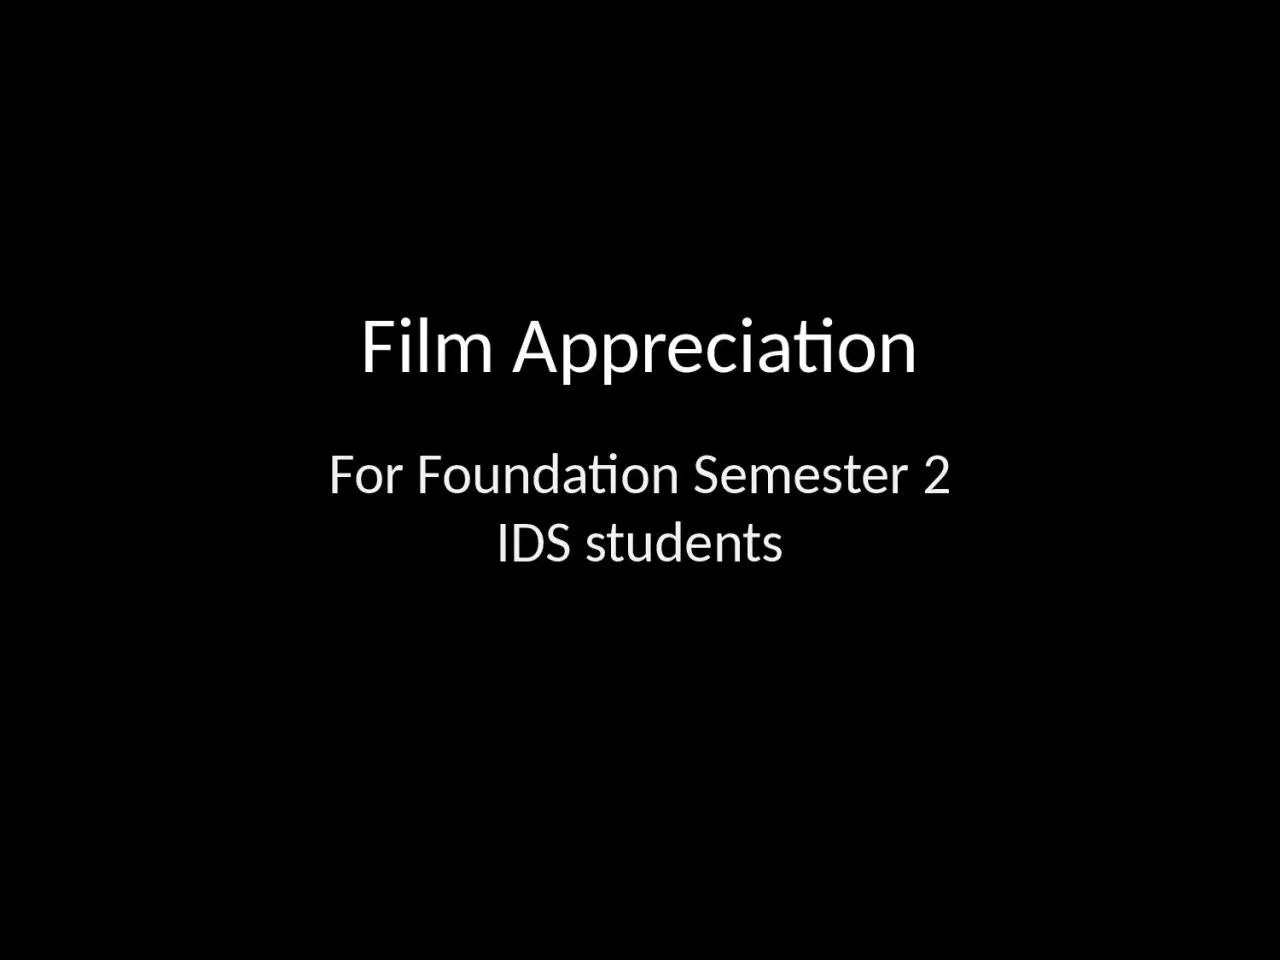 Film Appreciation For Foundation Semester 2 IDS students